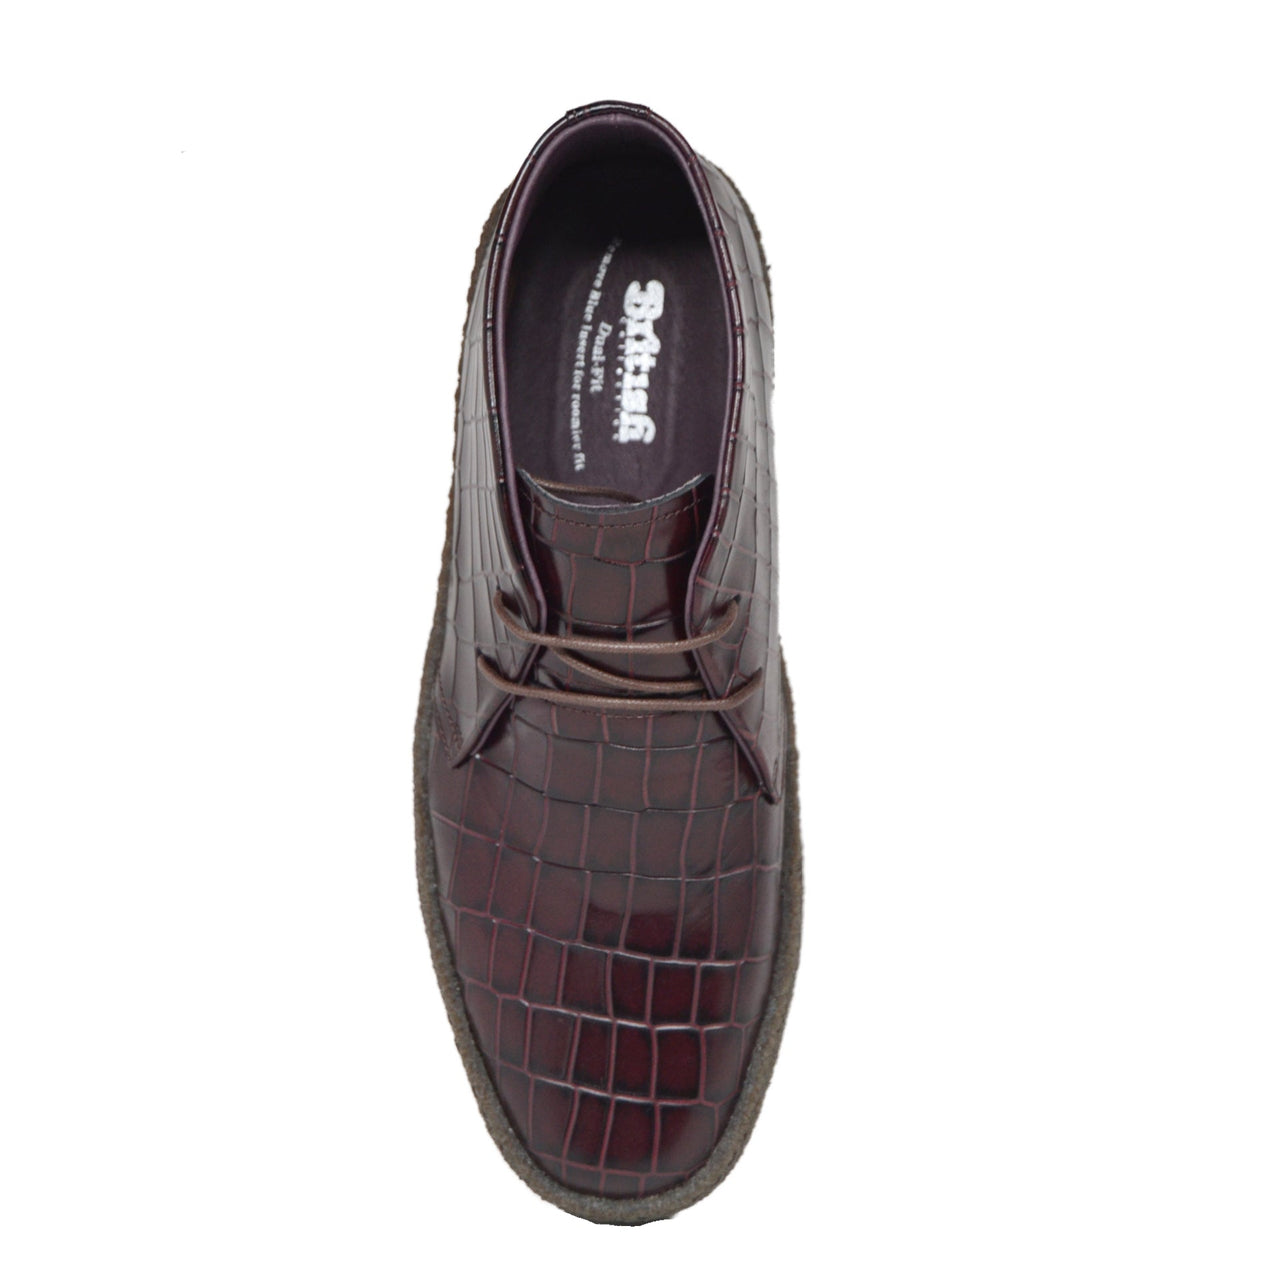 British Walkers Playboy Original High Top Crocs Men's Crocodile Leather Ankle Boots